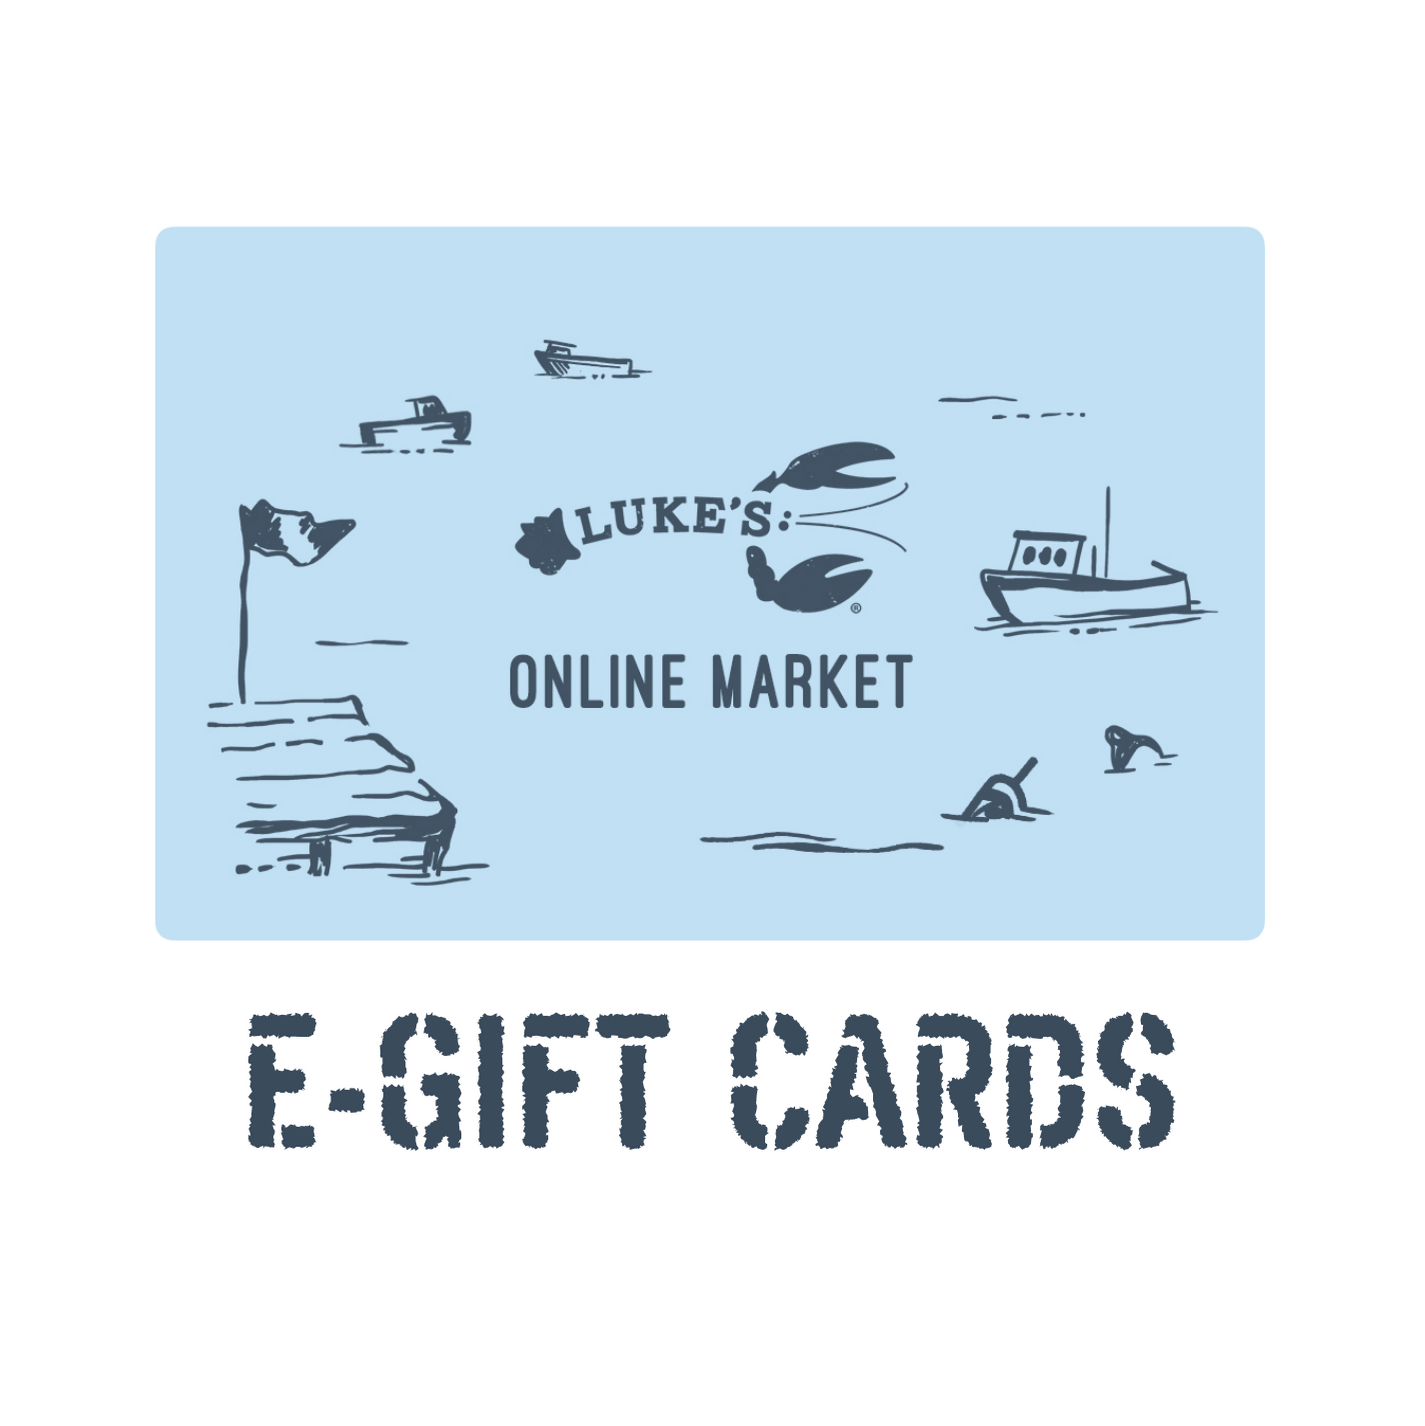 Gift card - E-Gift card